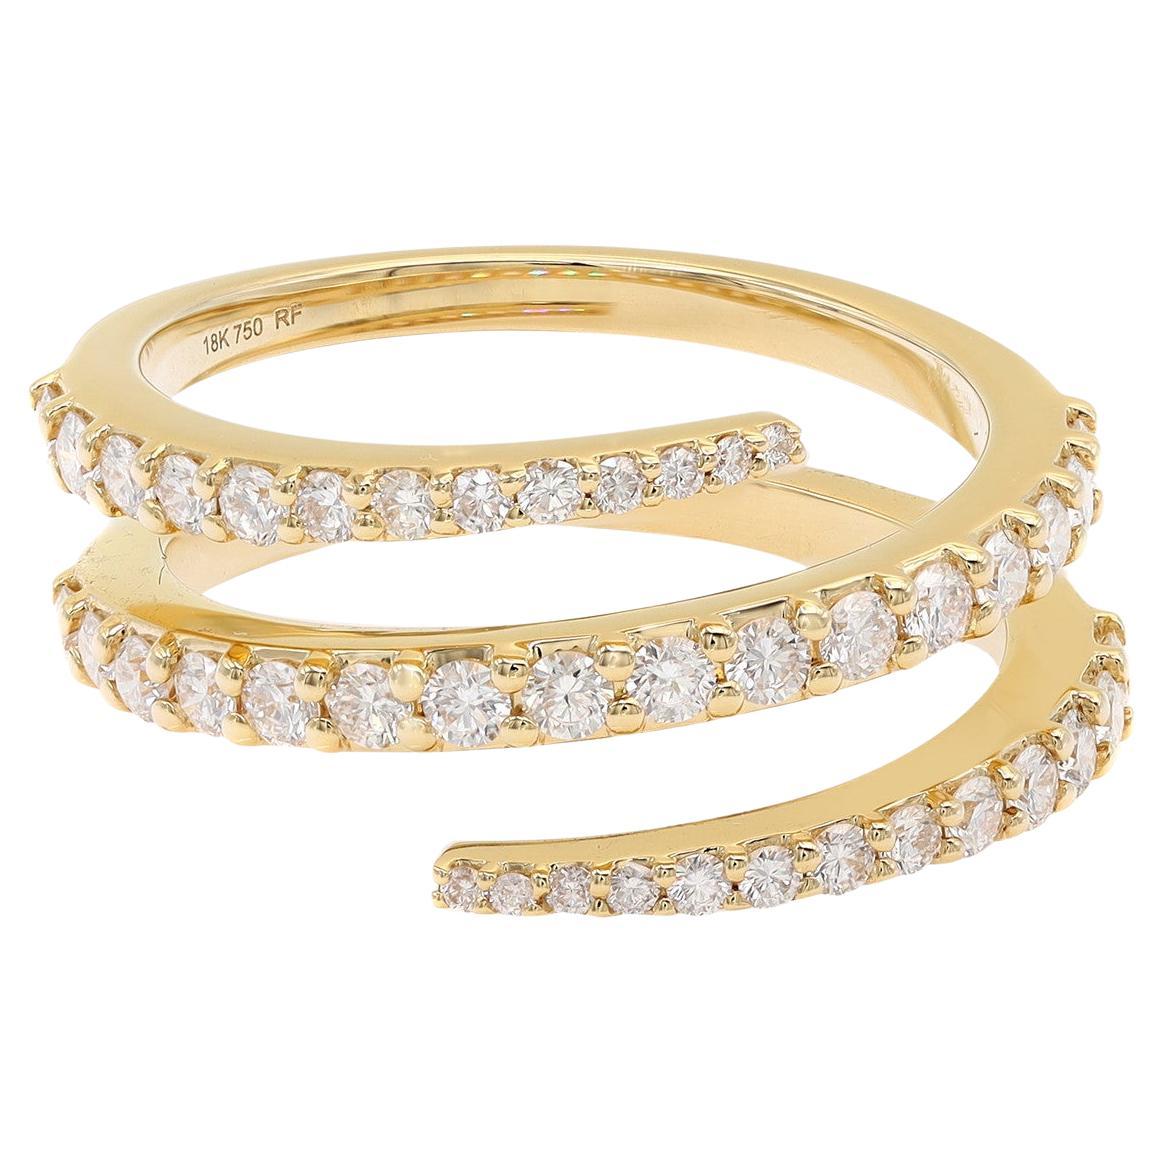 0.85 Carat Diamond Multi-Row Spiral Ring in 18K Yellow Gold